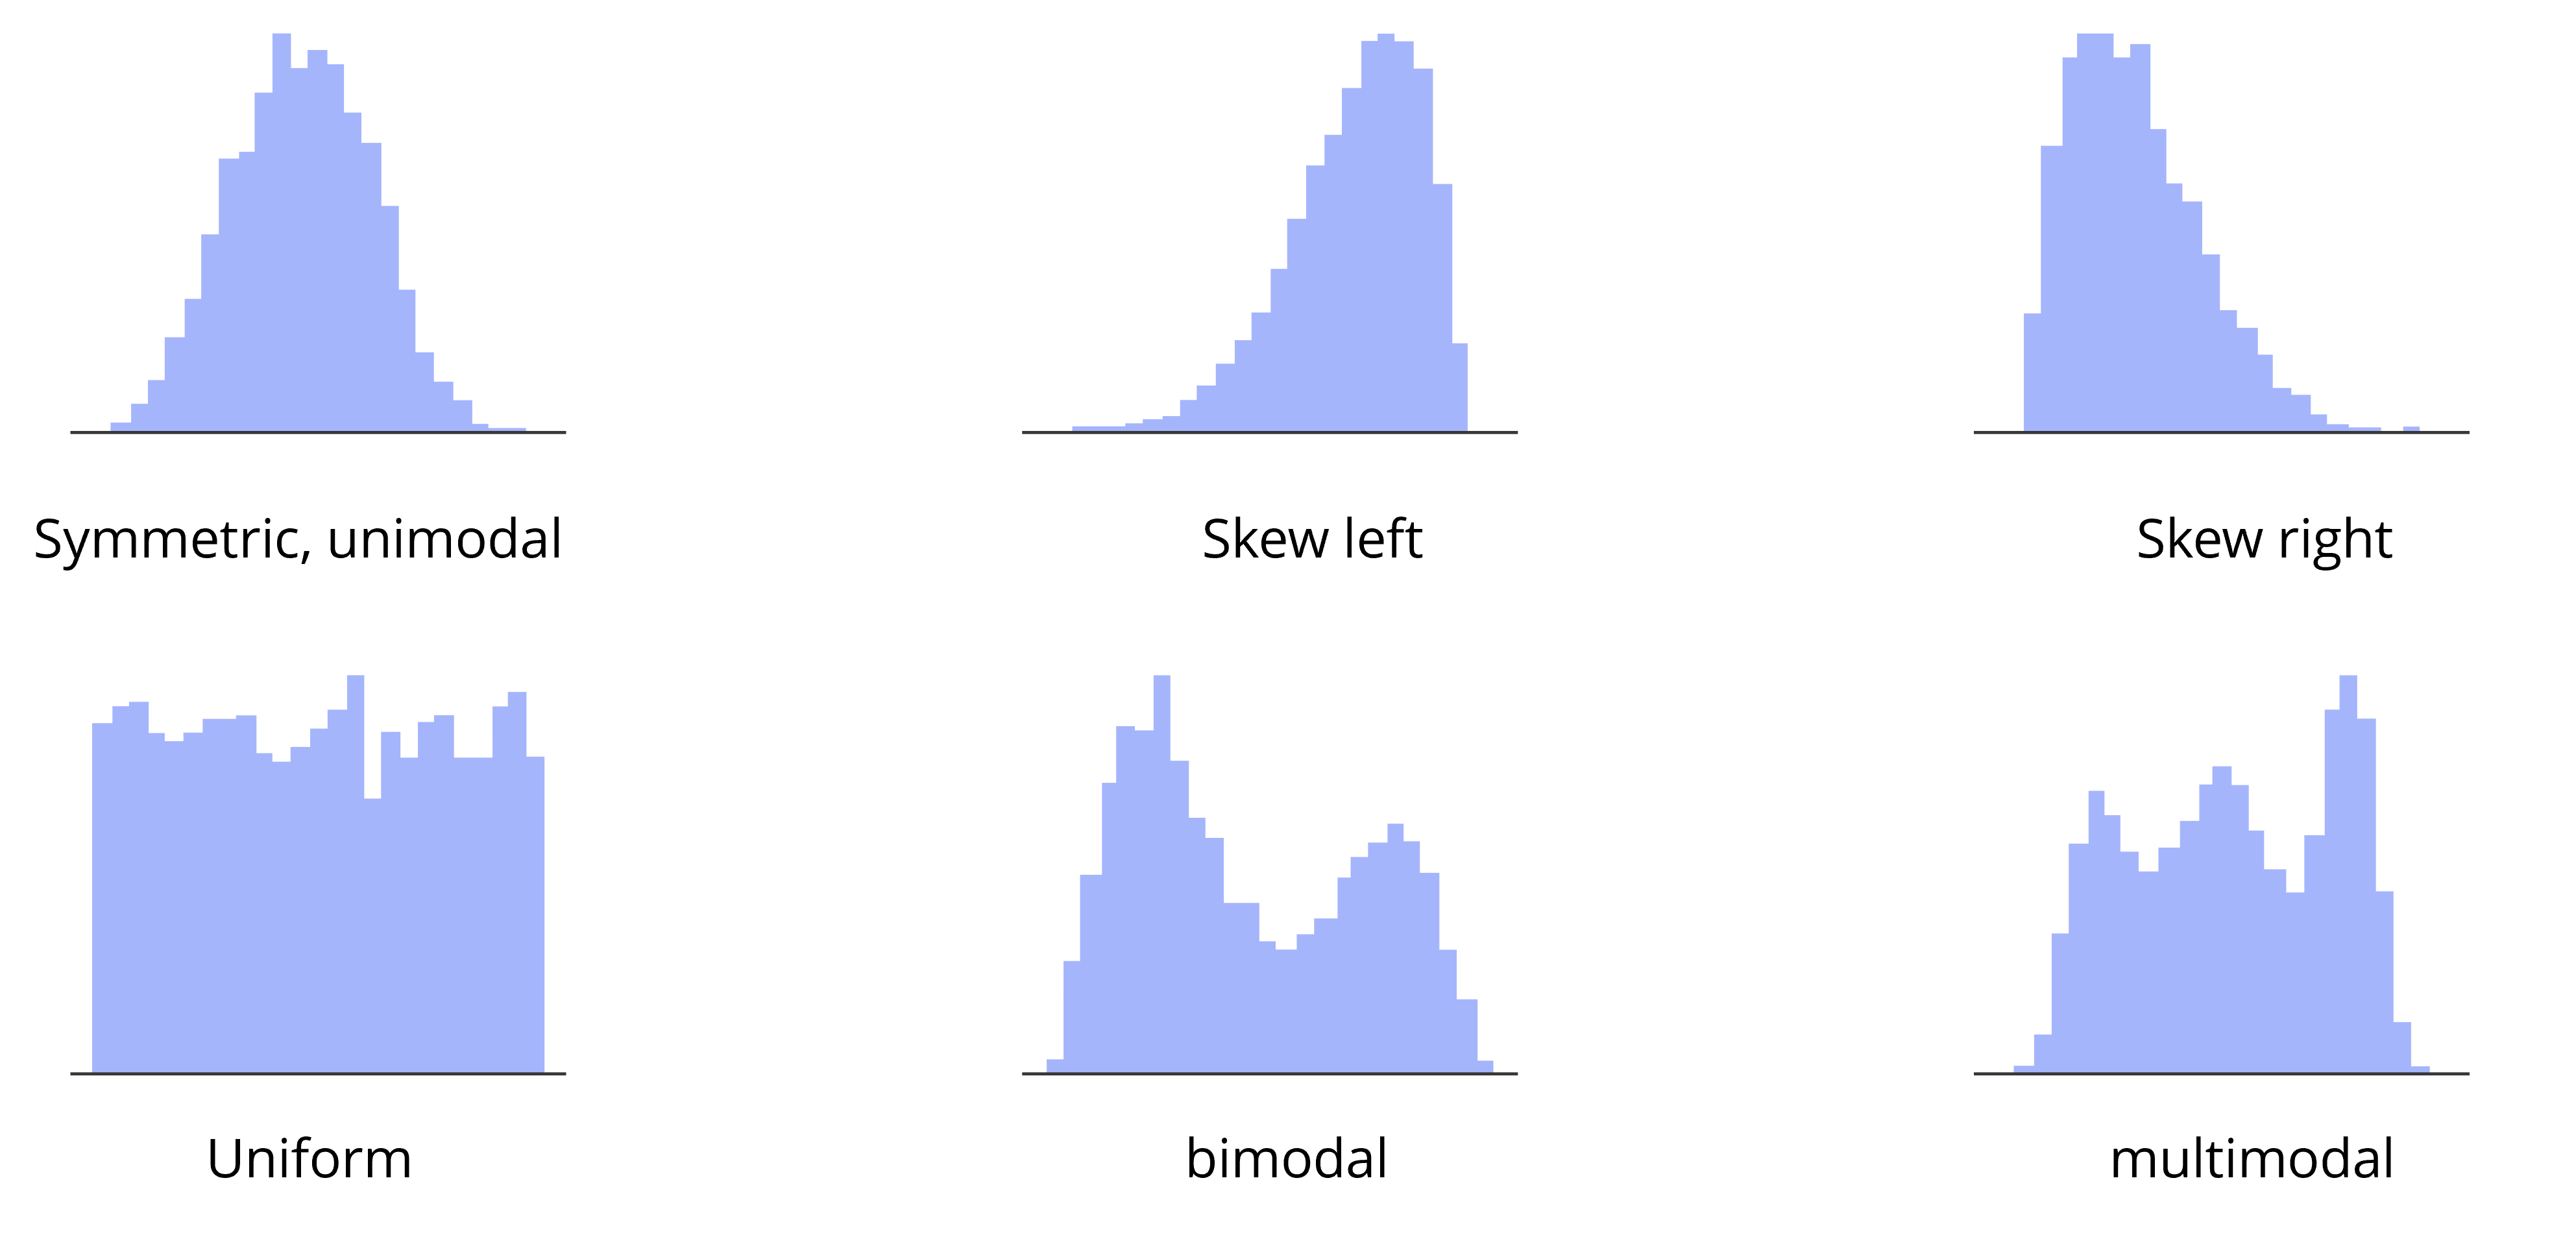 alternatives-histogram-visualizing-data-distribution-with-bars